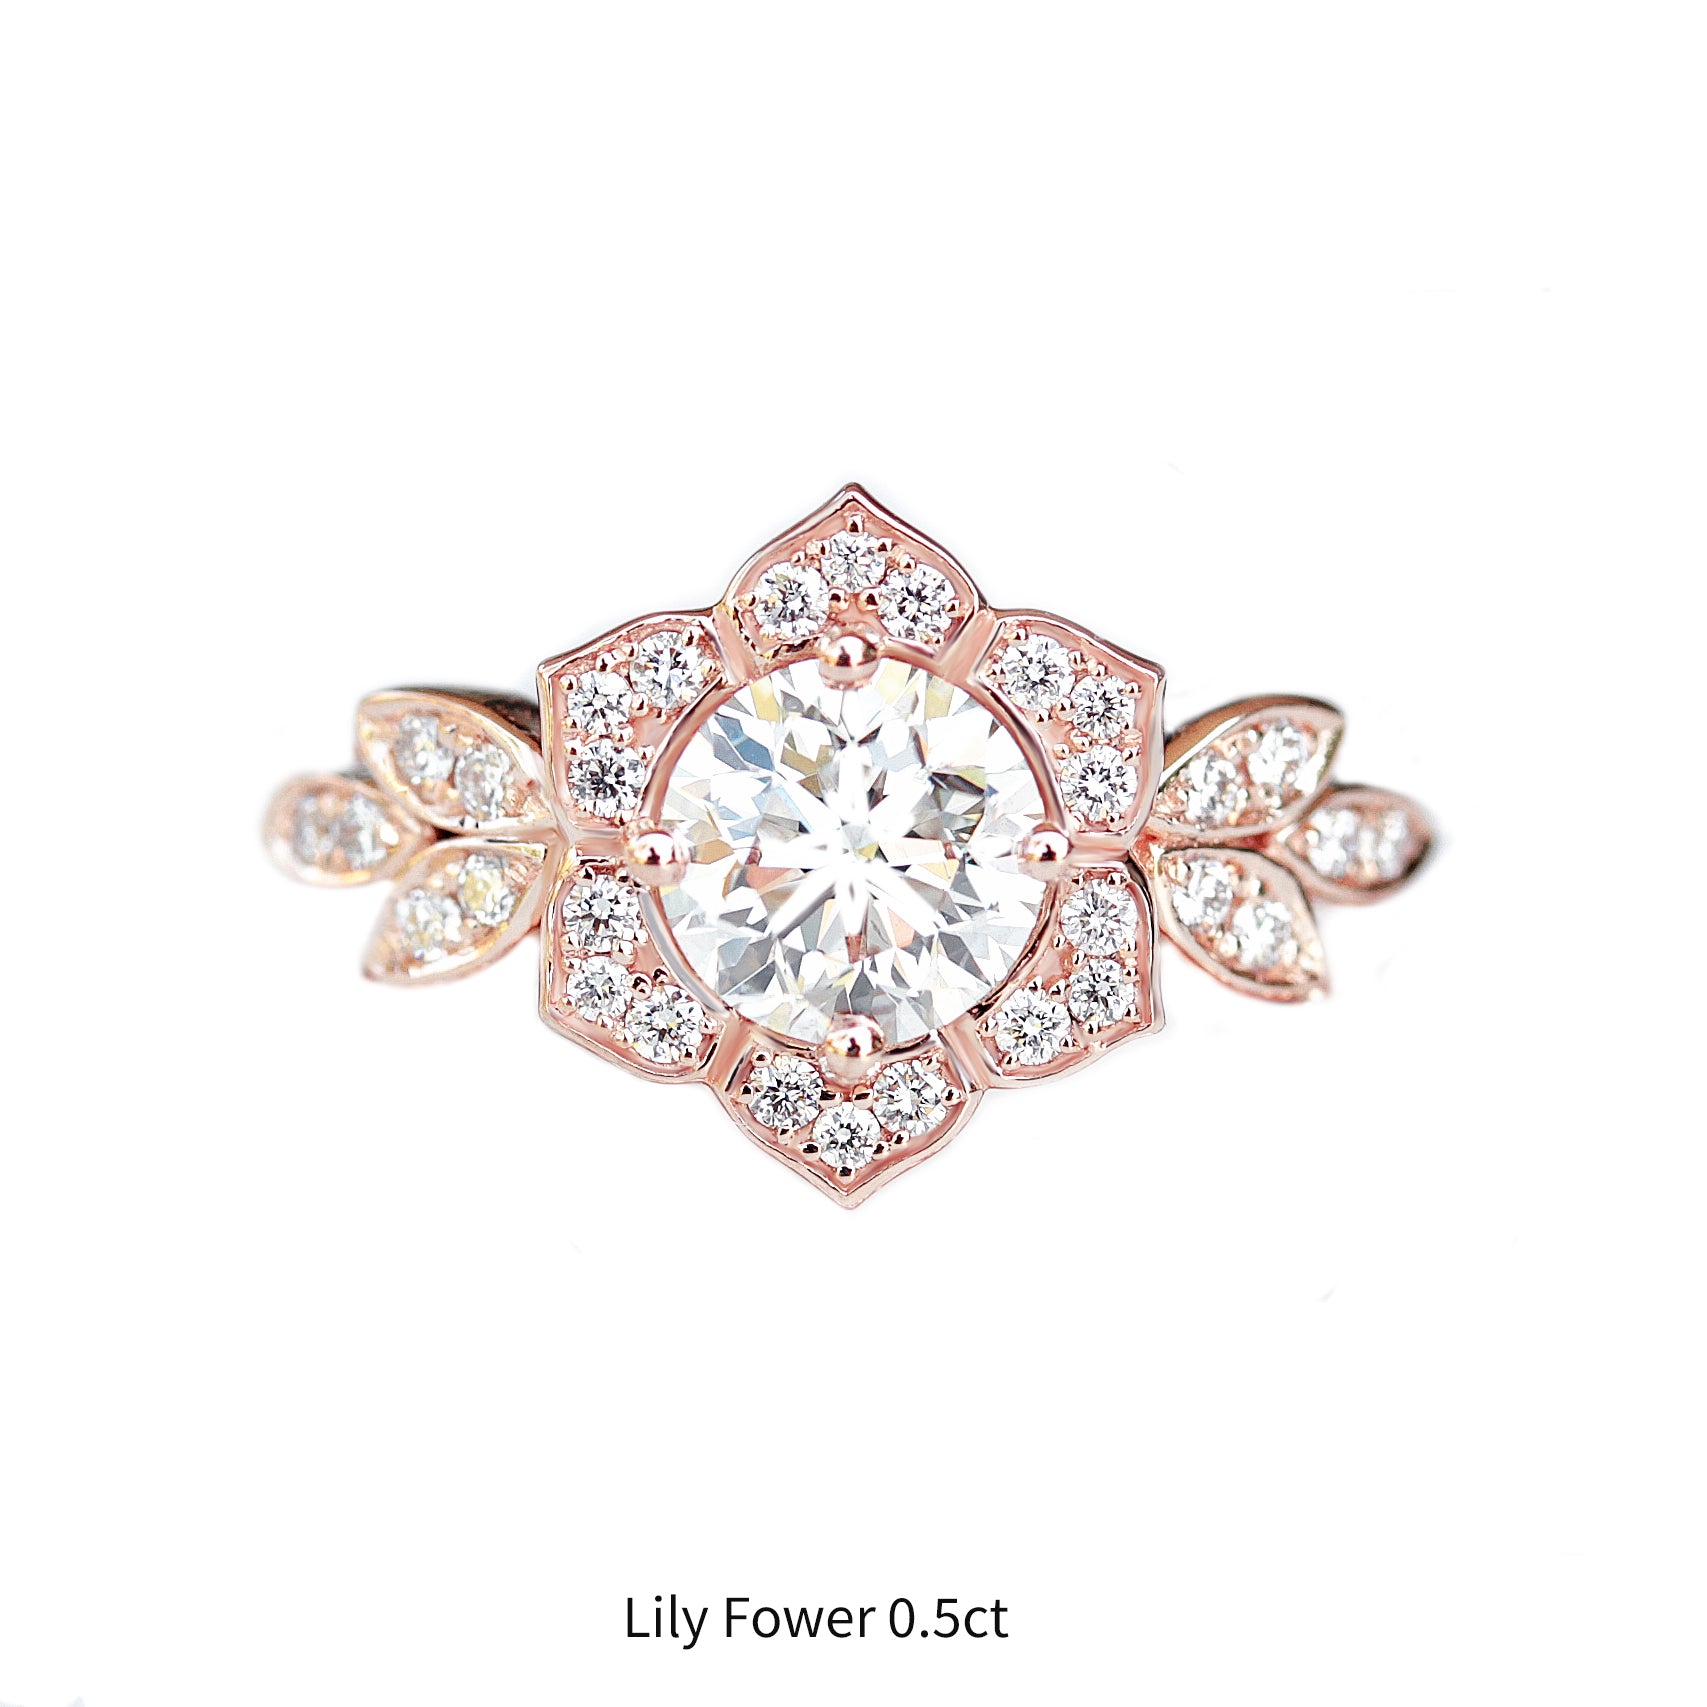 Lily Flower Round Diamond Engagement Ring